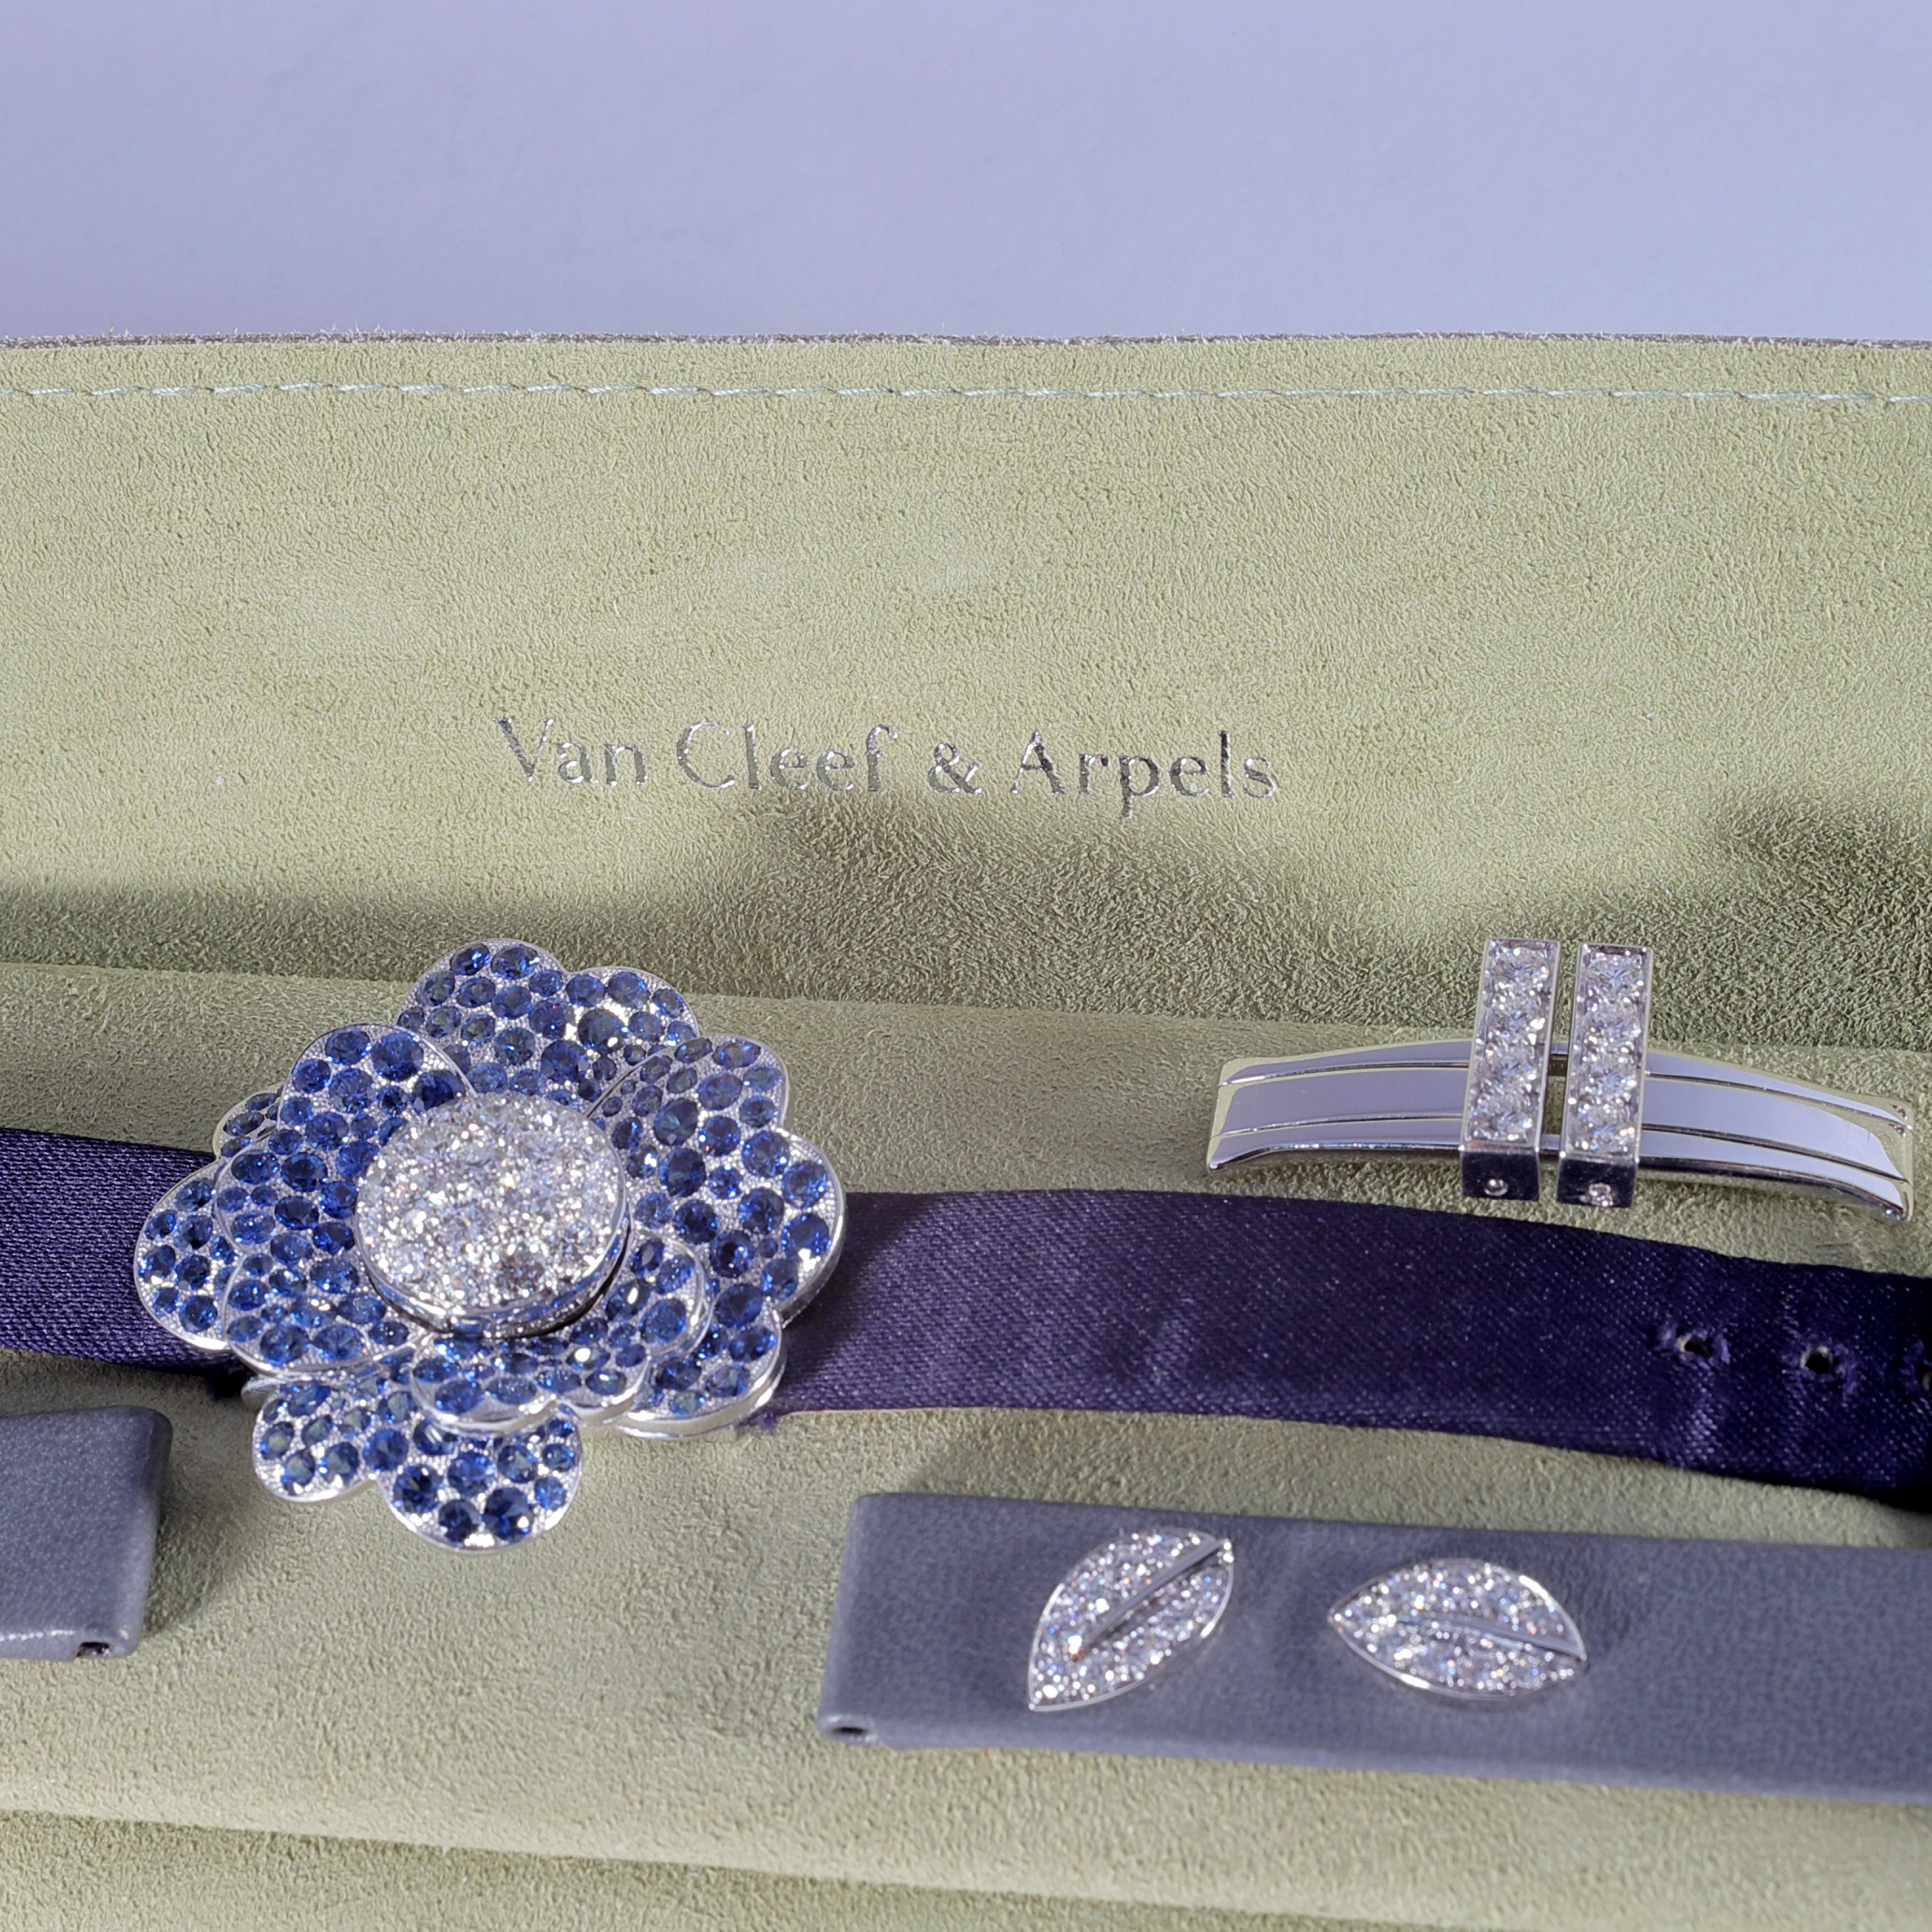 7.06 Carat Blue Sapphire and 3.32 Carat Diamond Van Cleef & Arpels Cosmos Watch 1